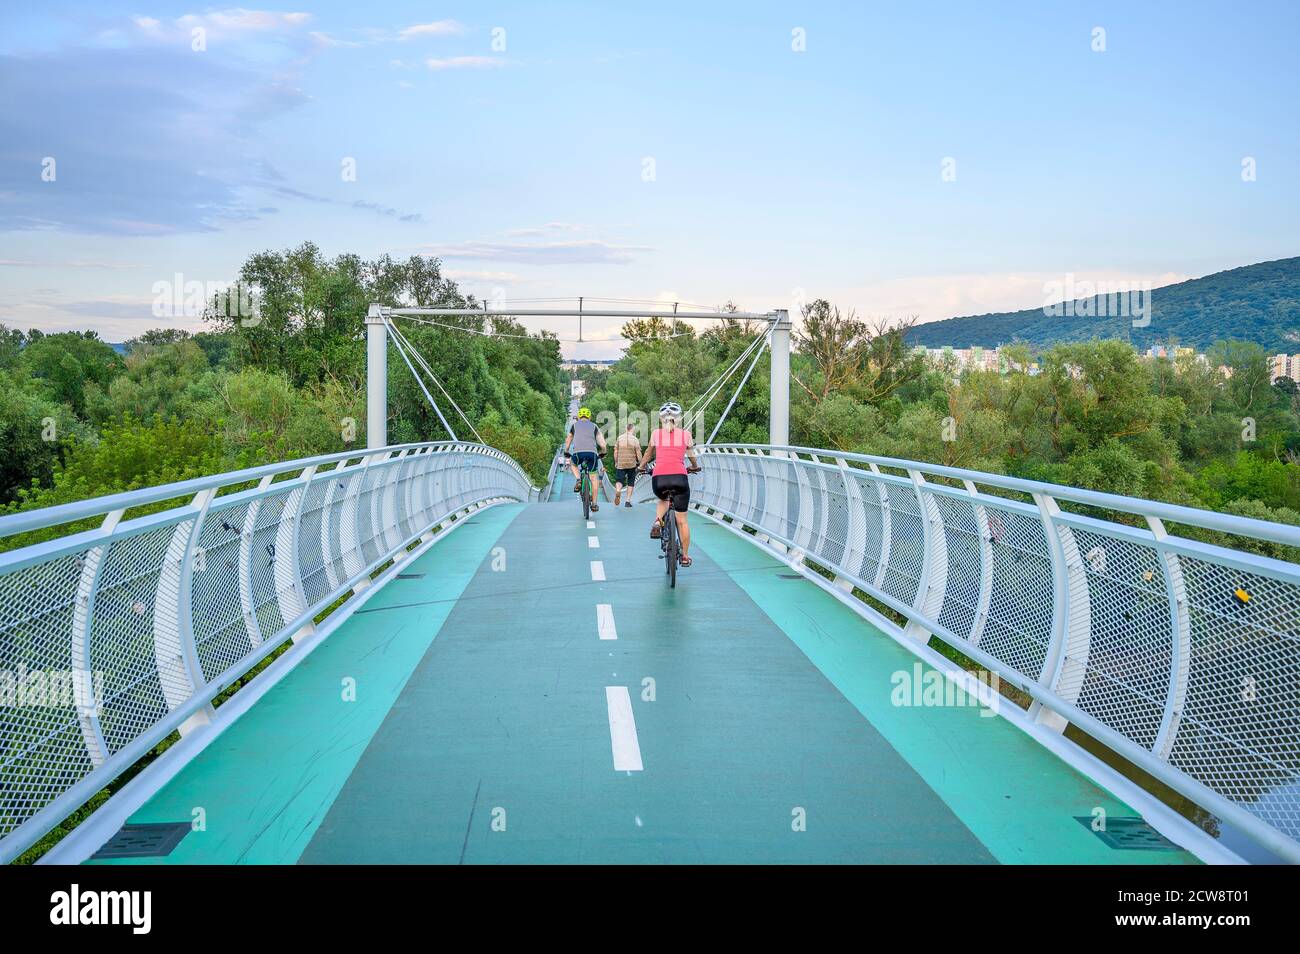 Bicycle riders riding on bicycle bridge (called “Freedom bridge”) connecting two countries Slovakia and Austria (Bratislava, SLOVAKIA) Stock Photo